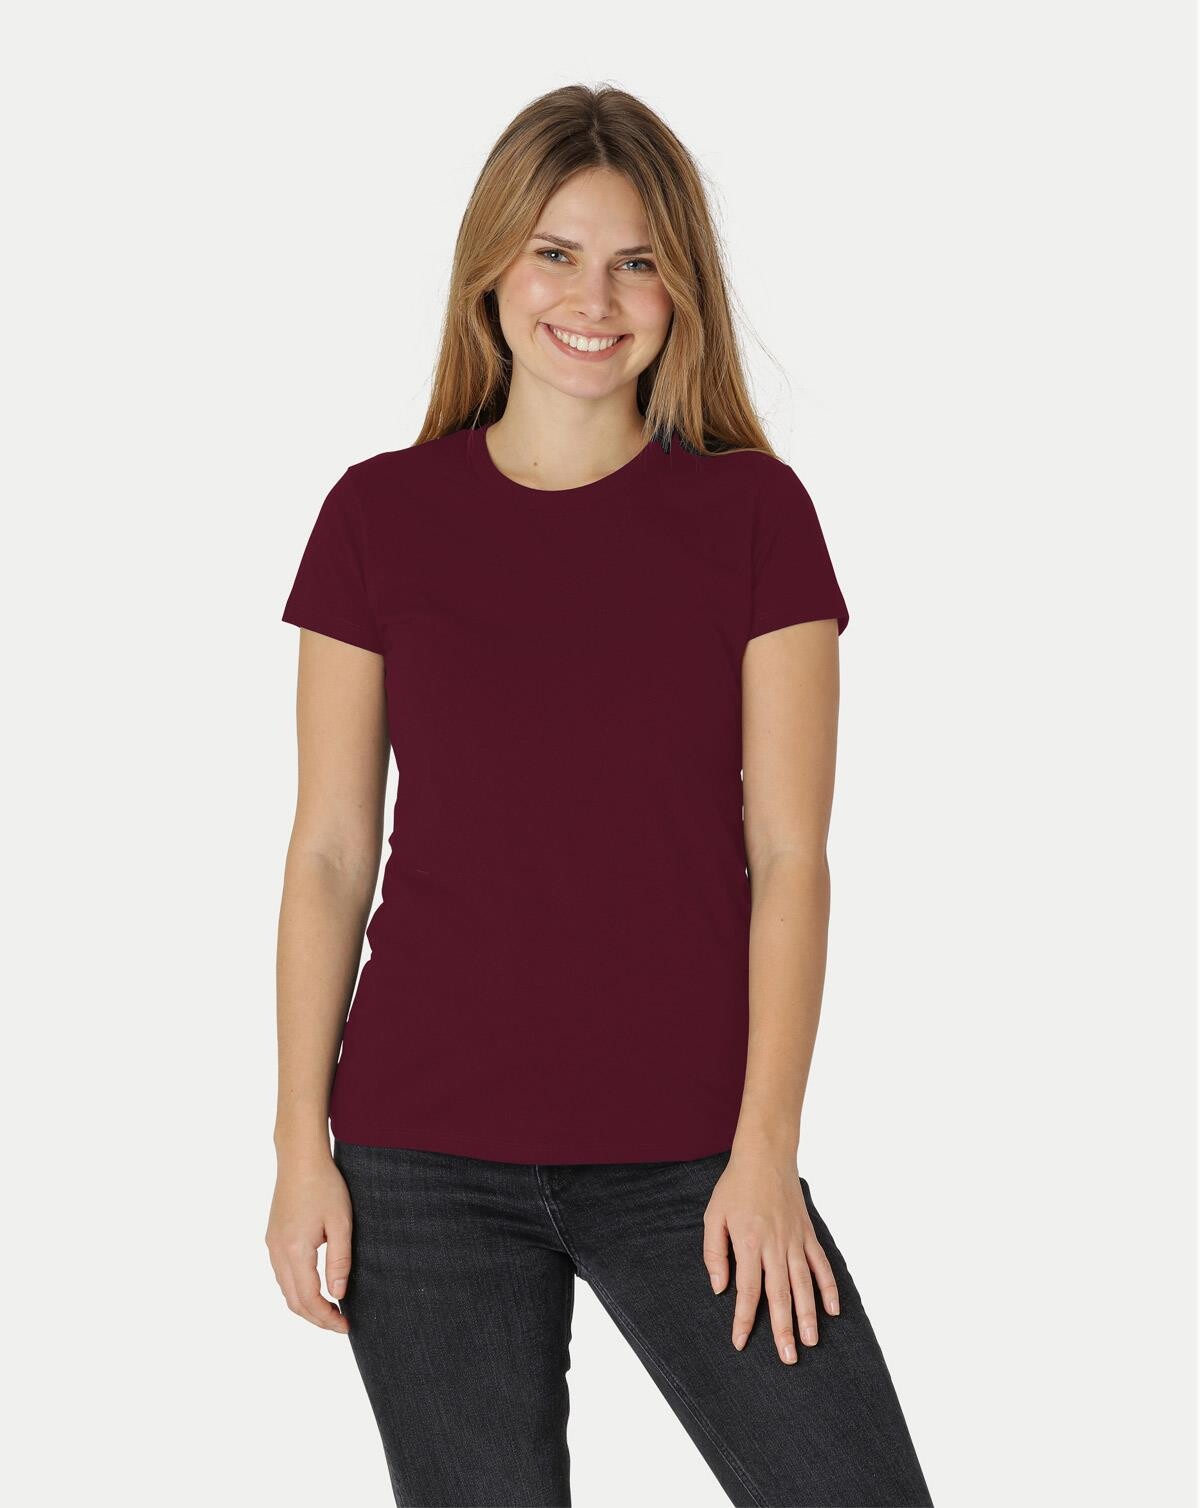 Neutral Økologisk Dame Tætsiddende T-Shirt (Bordeaux, S)